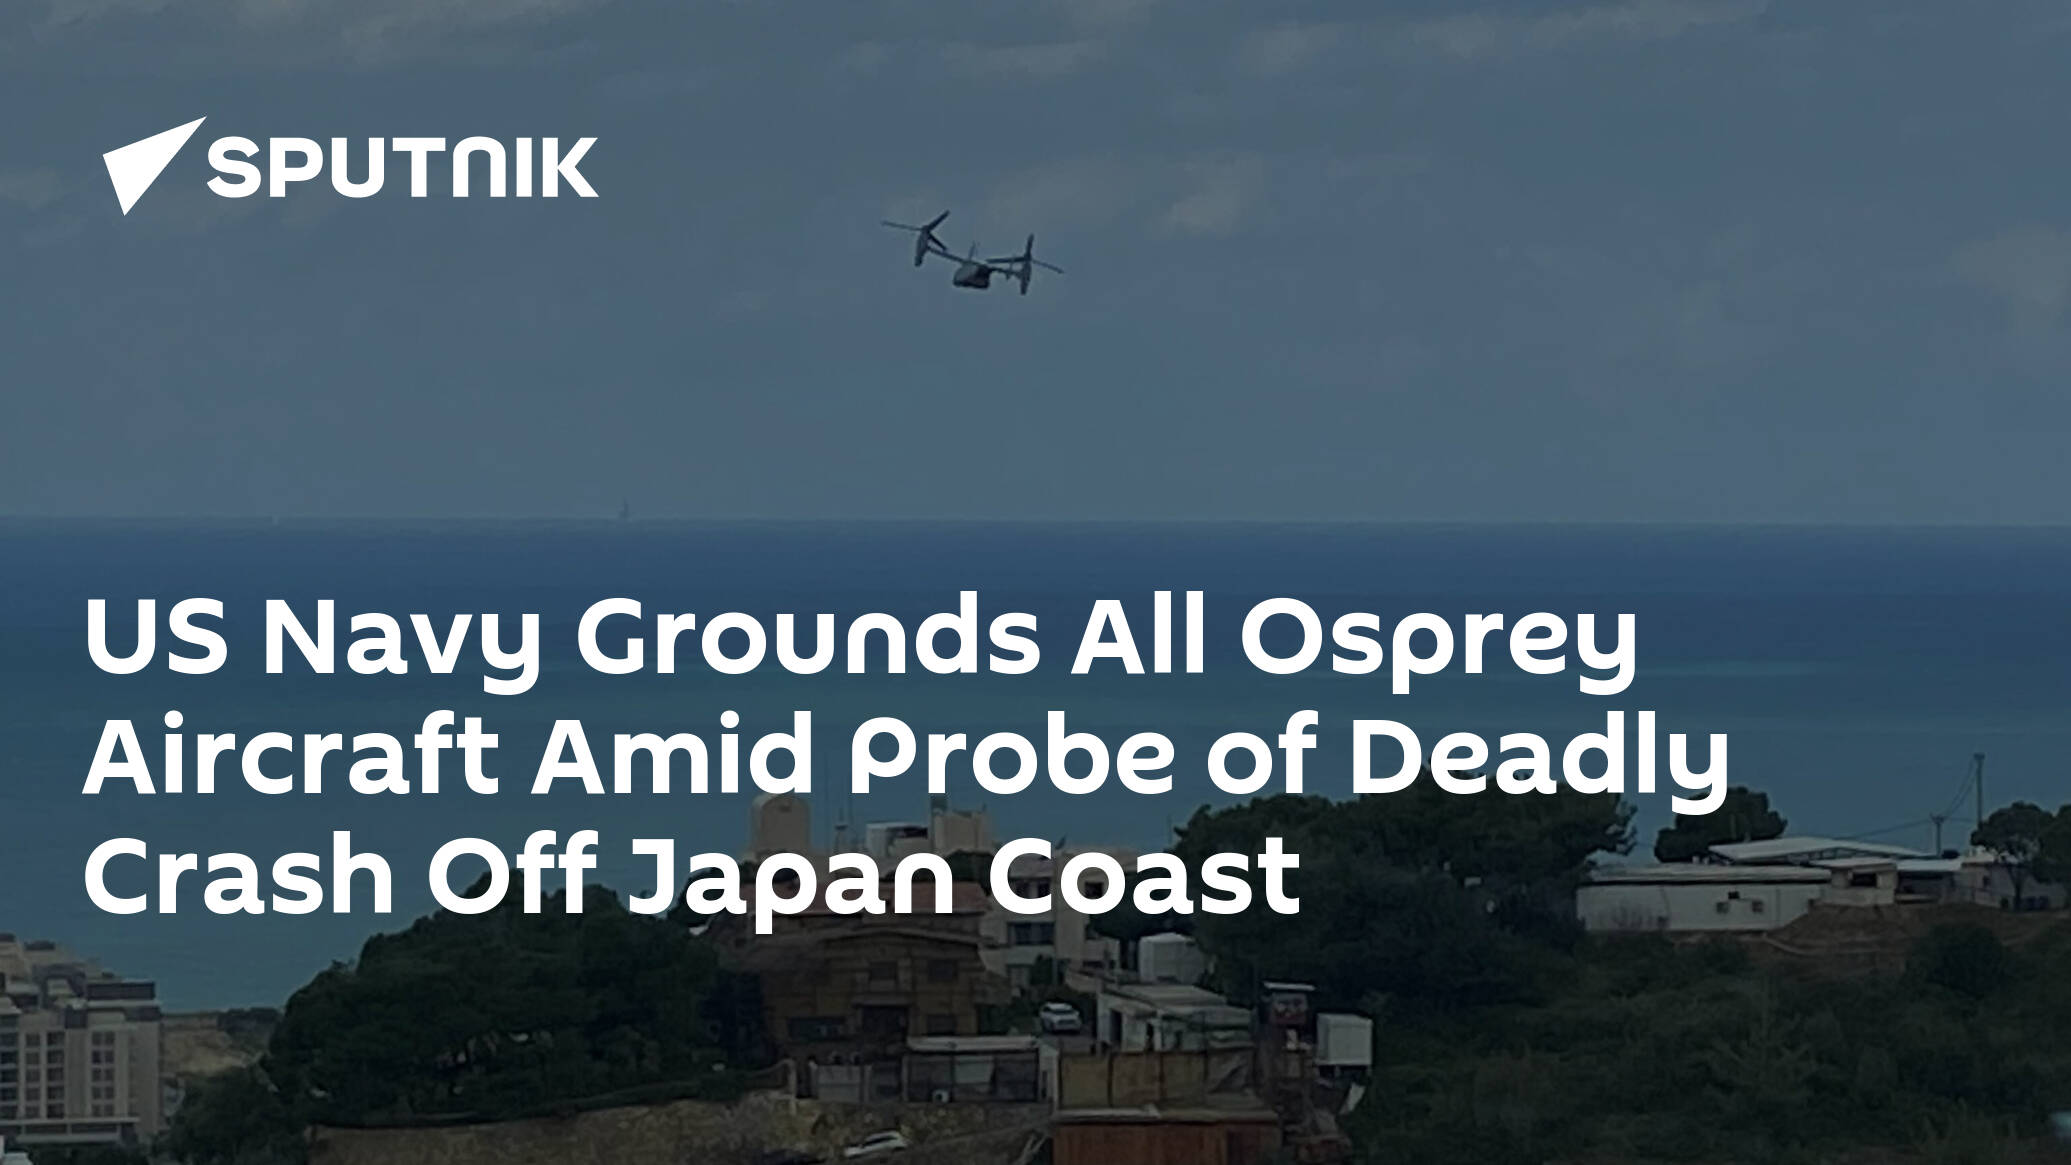 US Navy Grounds All Osprey Aircraft Amid Probe of Deadly Crash Off Japan Coast